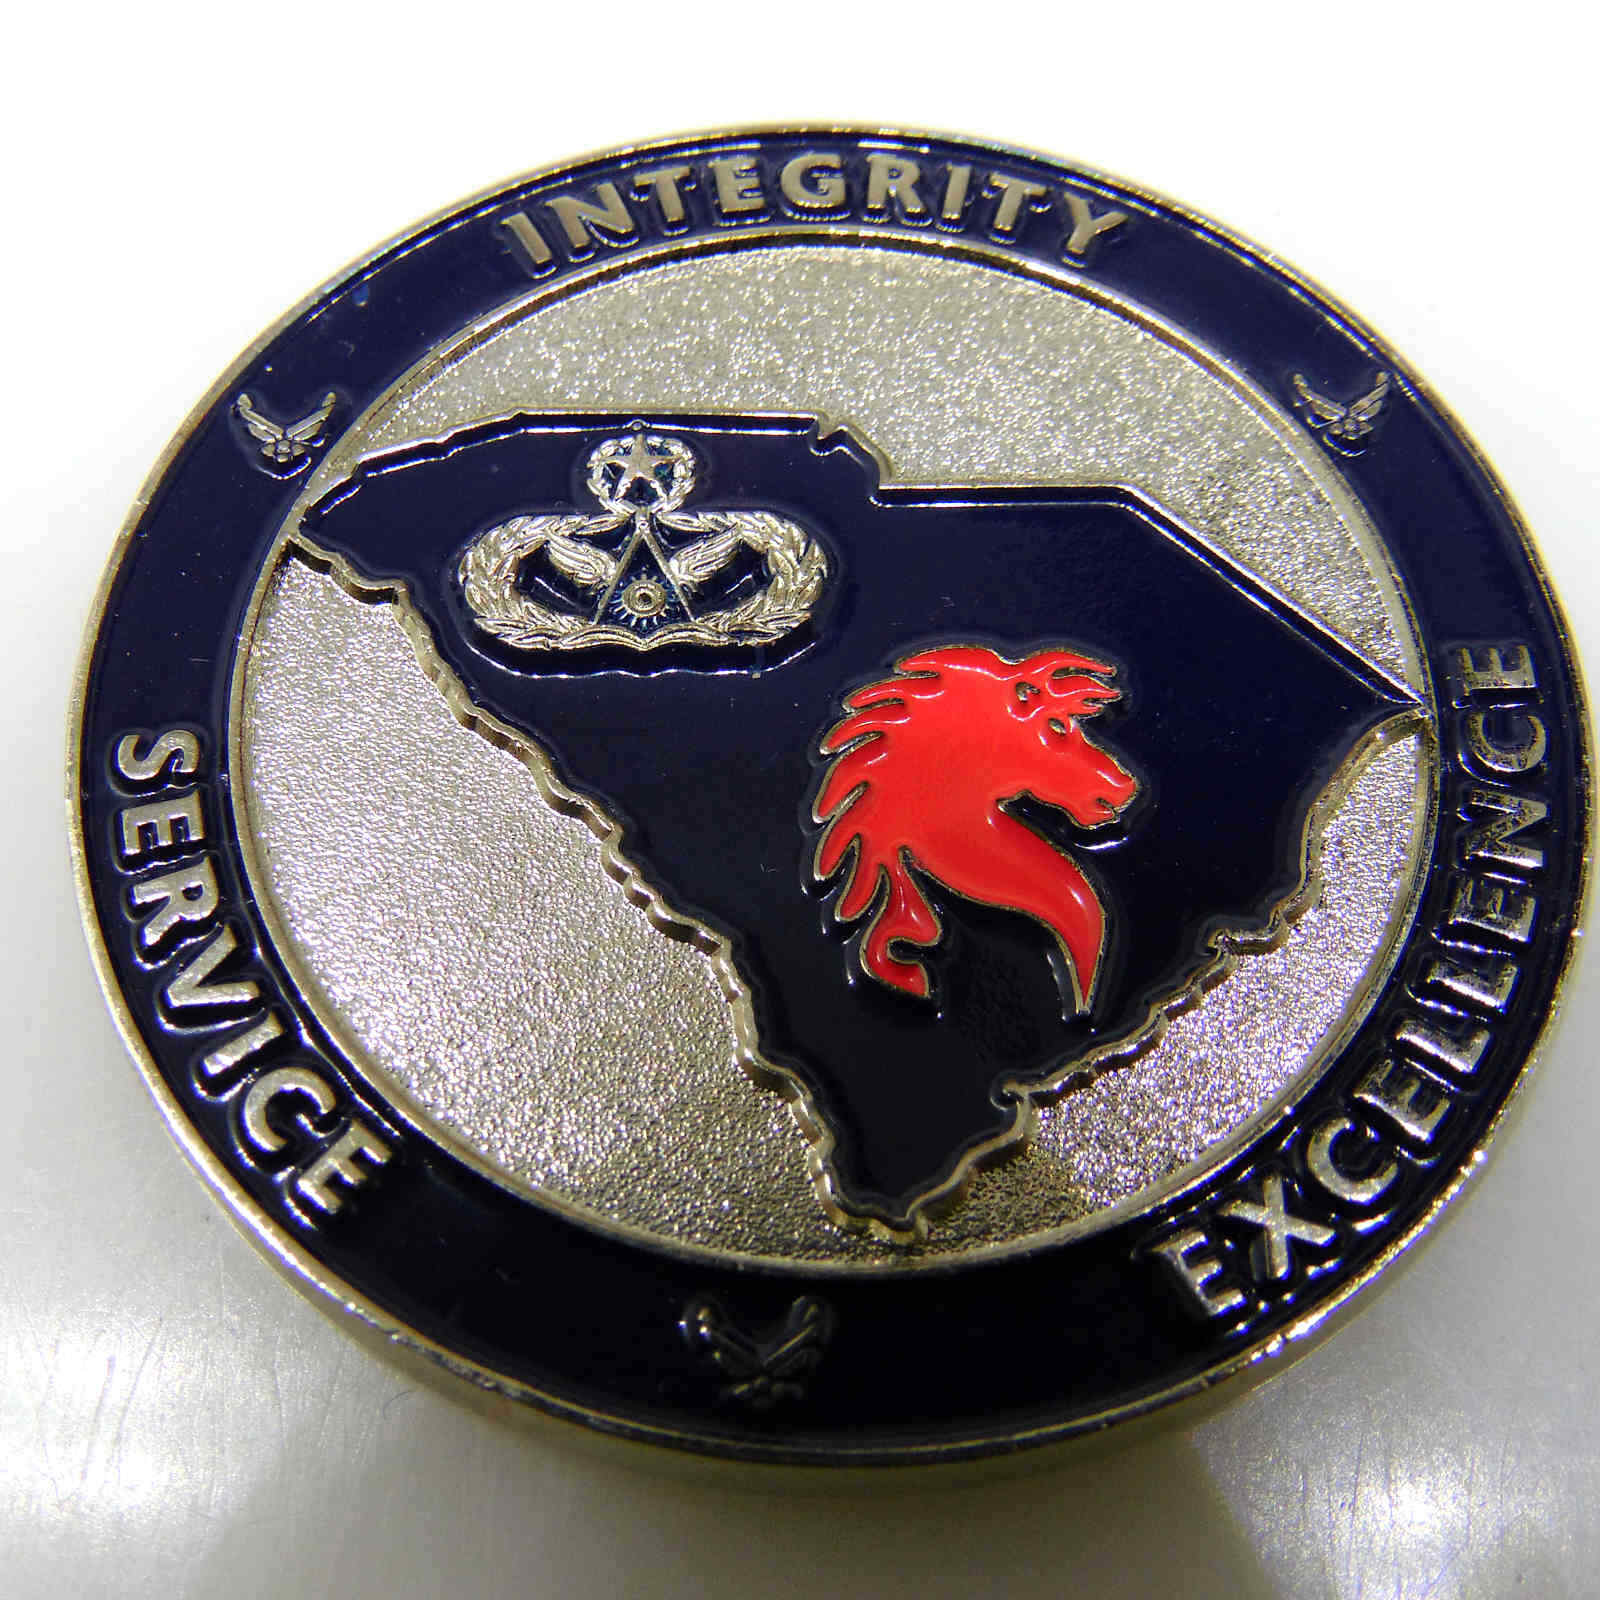 USAF COMSGT SOOTT WAIZMANN OUTSTANDING PERFORMANCE CHALLENGE COIN